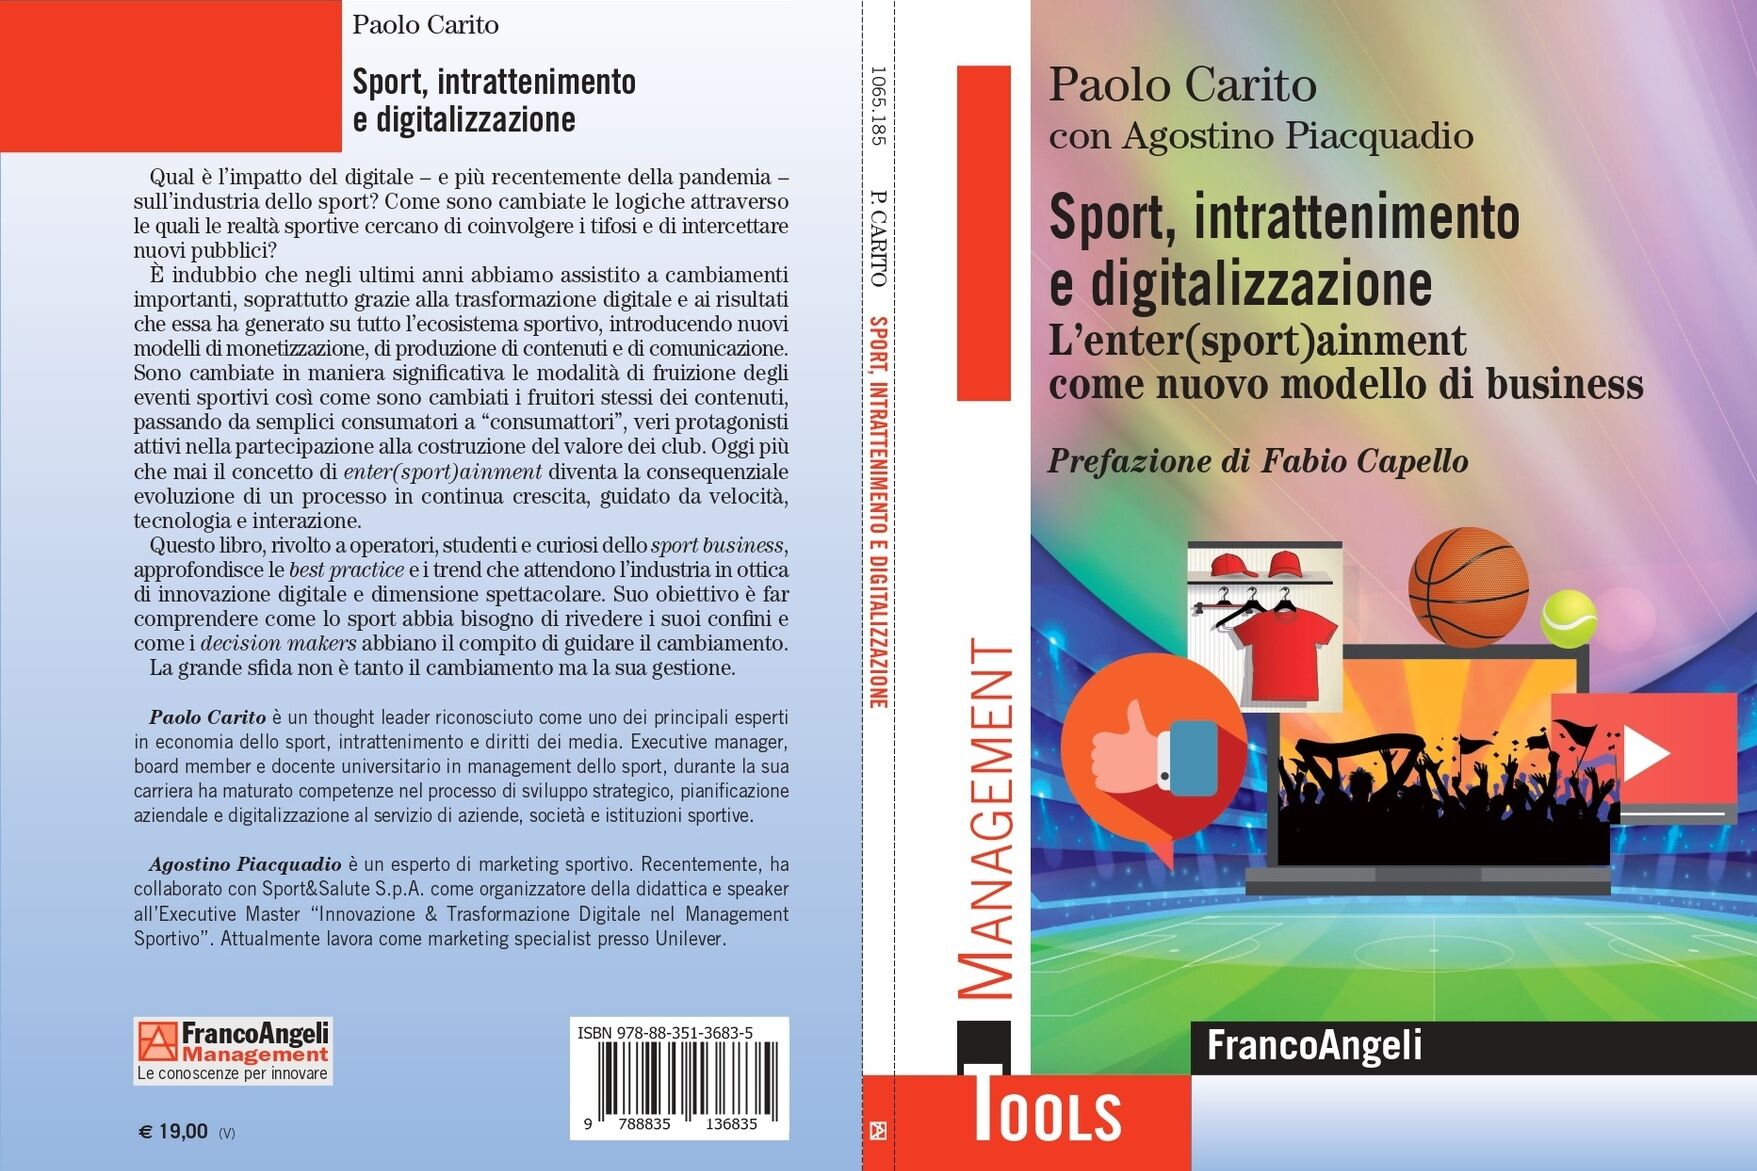 entersporttainment: obálka a zadní strana knihy „Sport, zábava a digitalizace. Vstupte do sportu jako nového obchodního modelu“, napsal Paolo Carito s Agostinem Piacquadiem a vydal Franco Angeli Editore